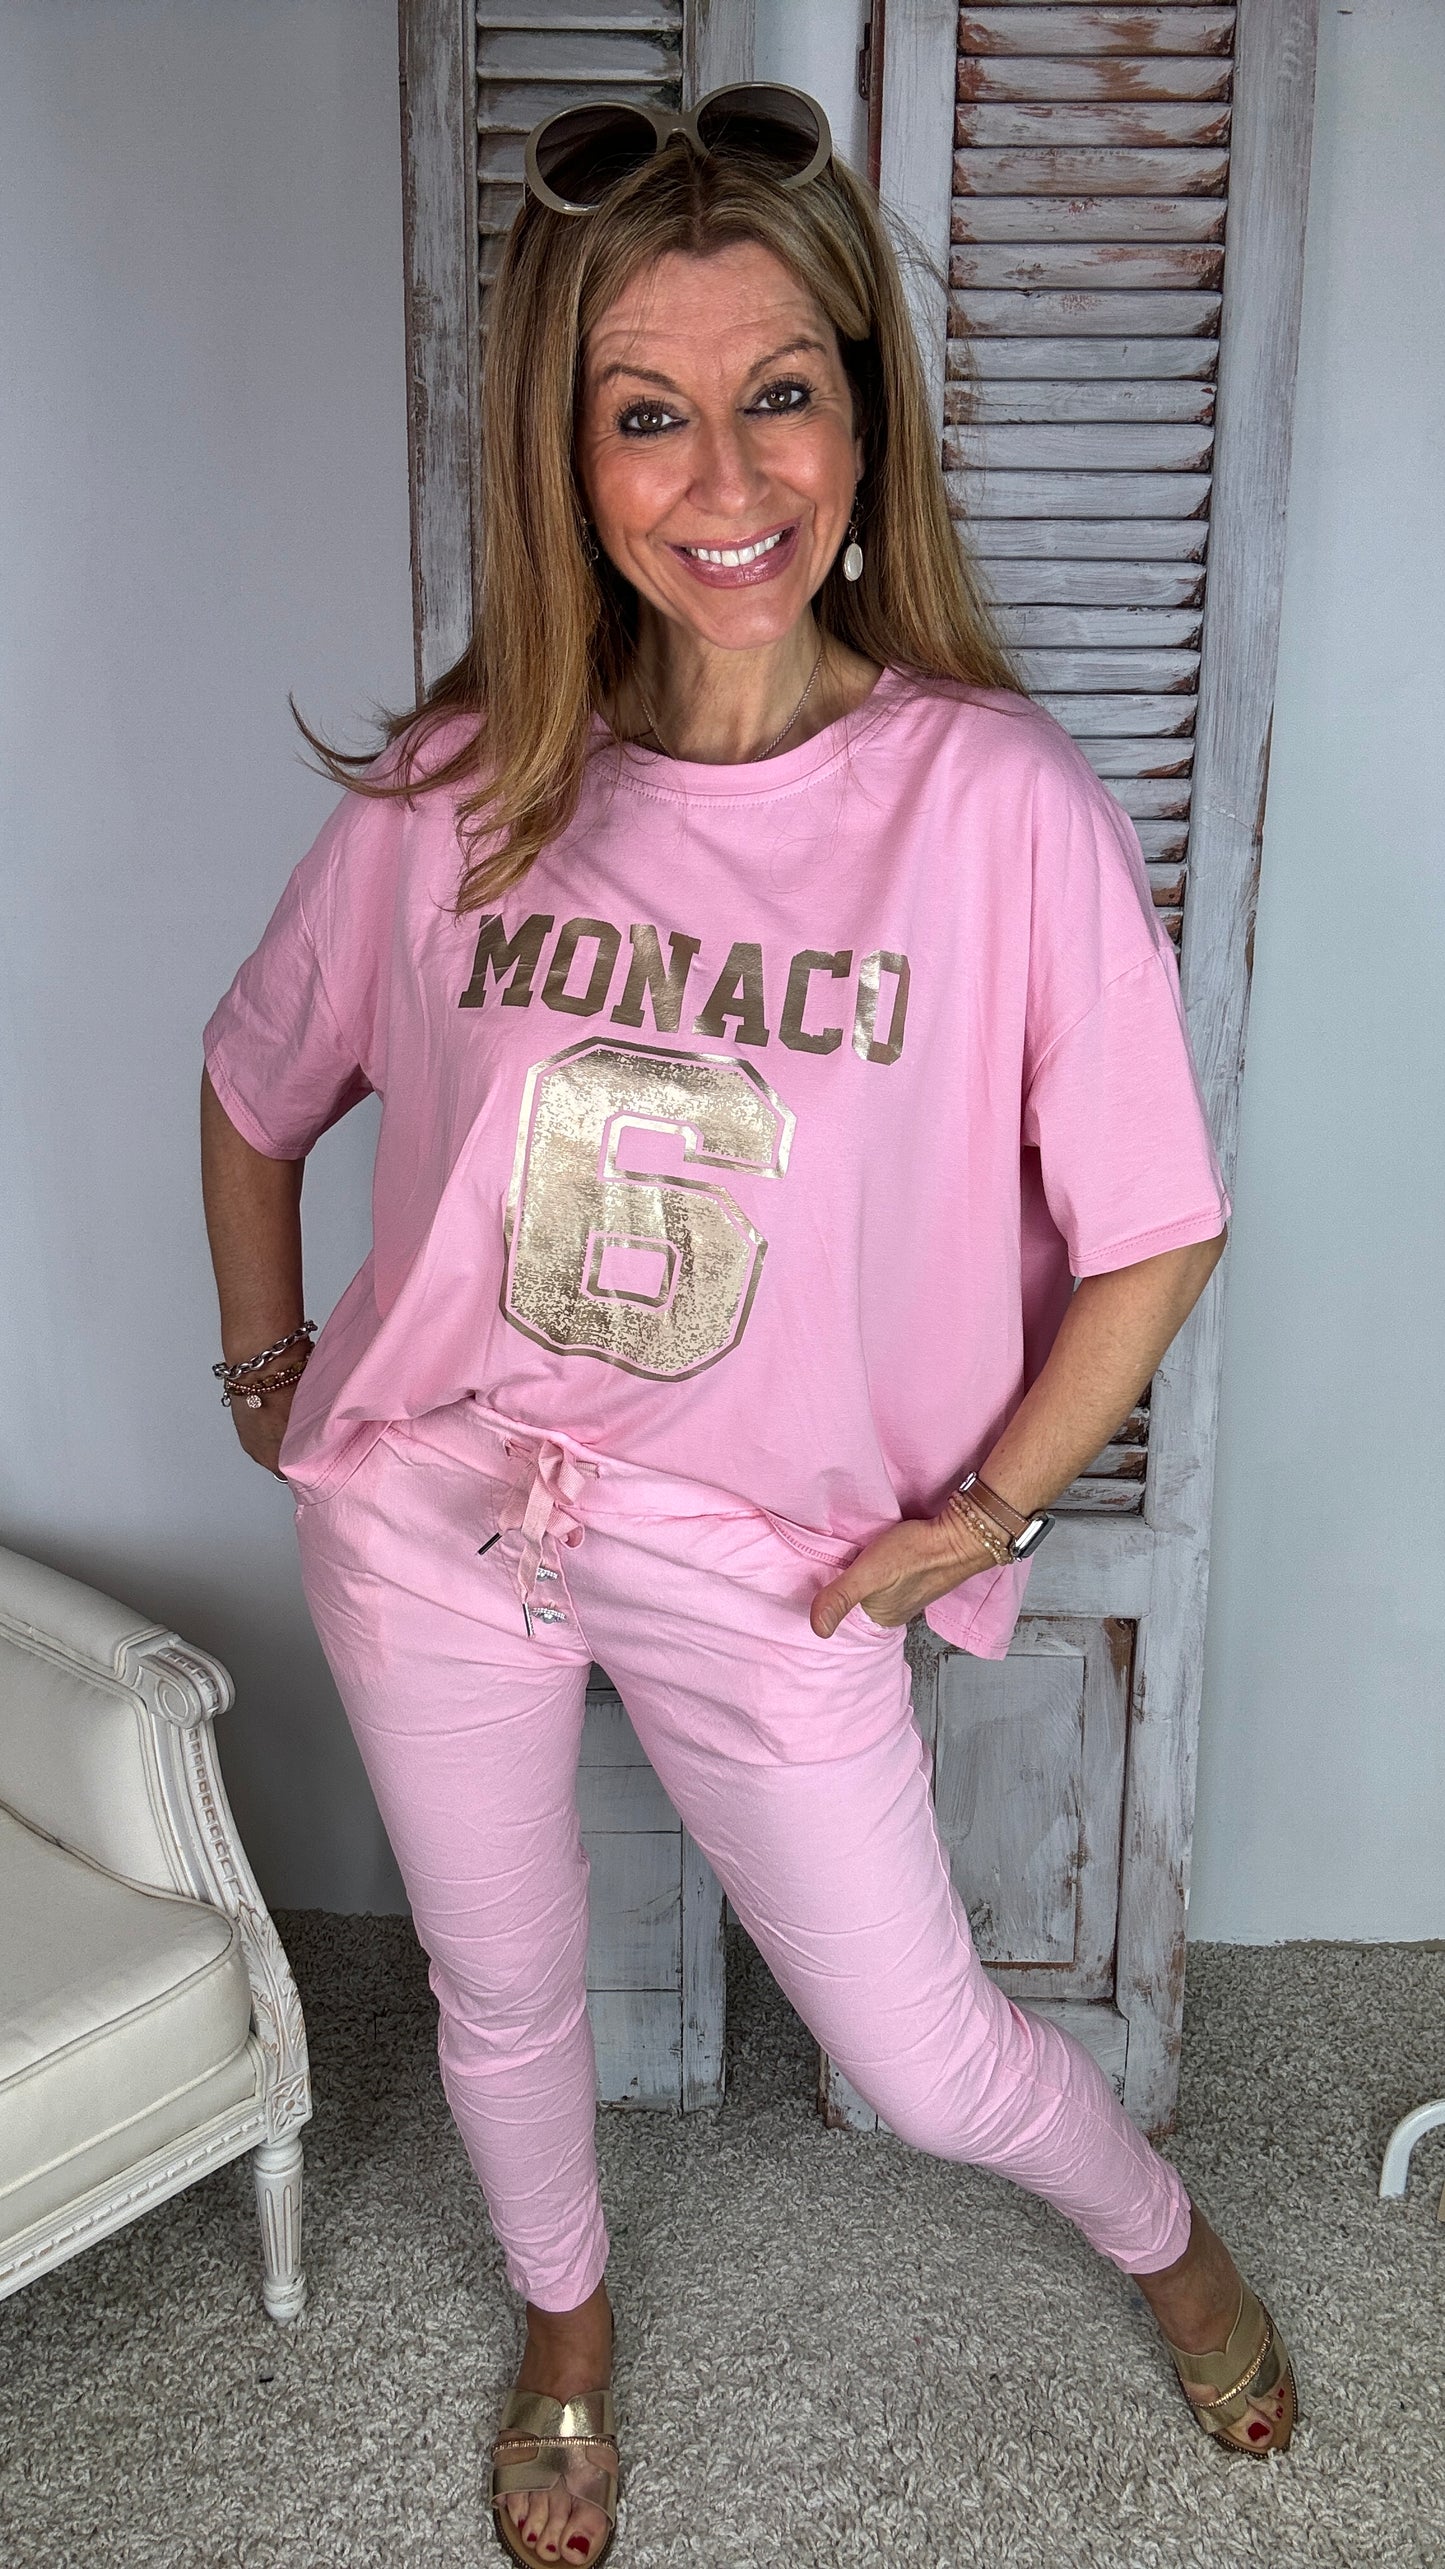 Shirt "Monaco"